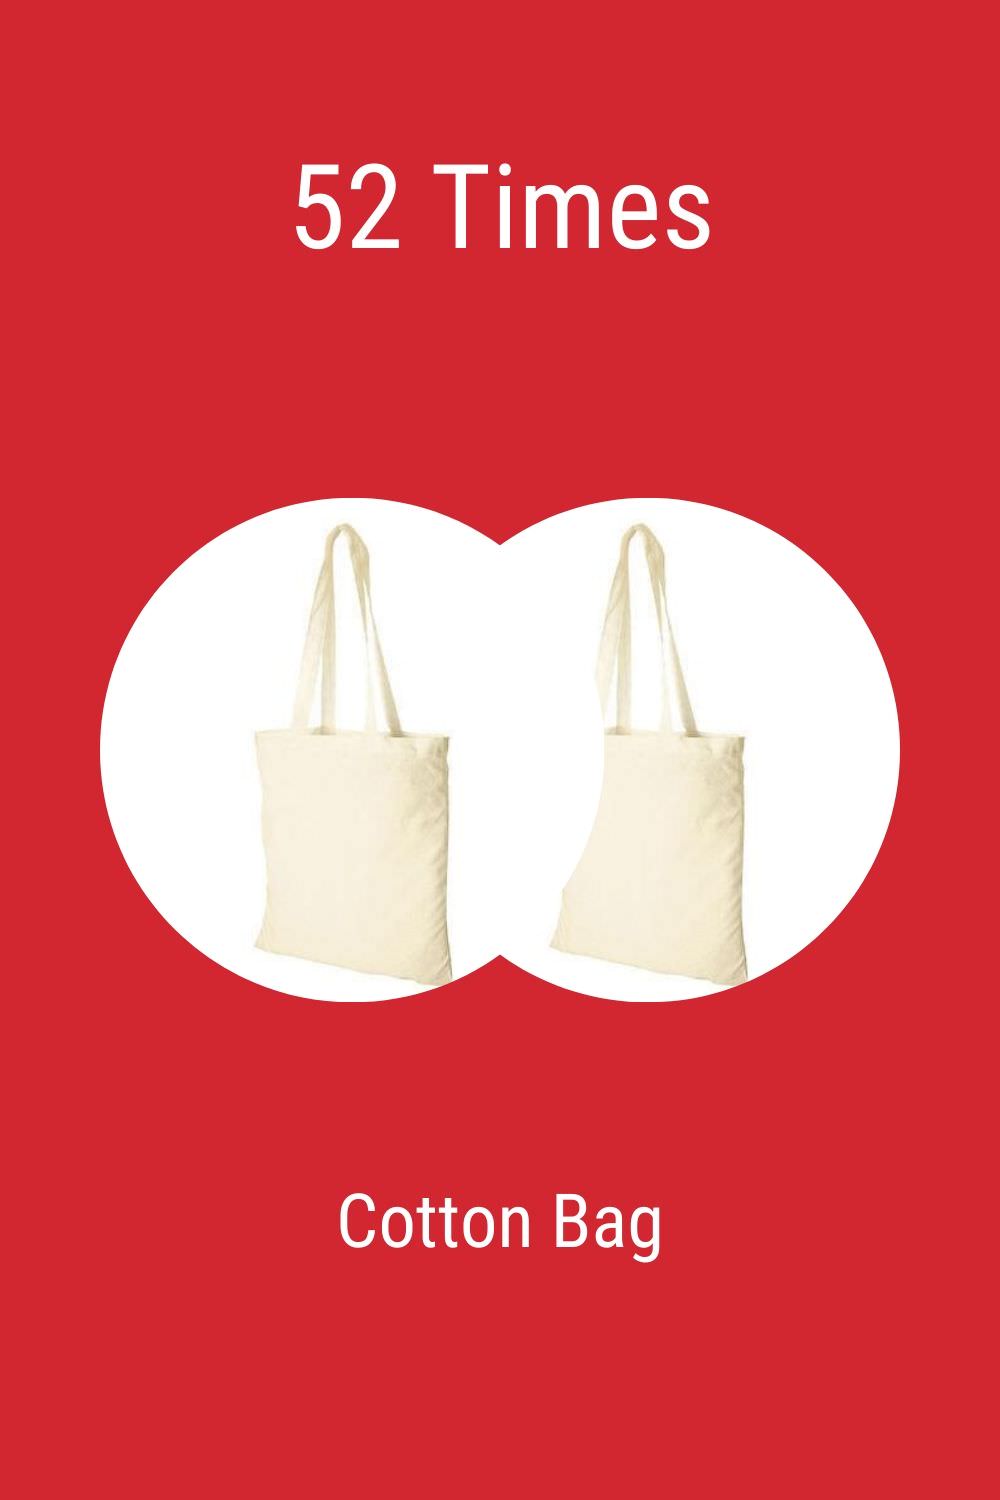 Cotton Bag reusability